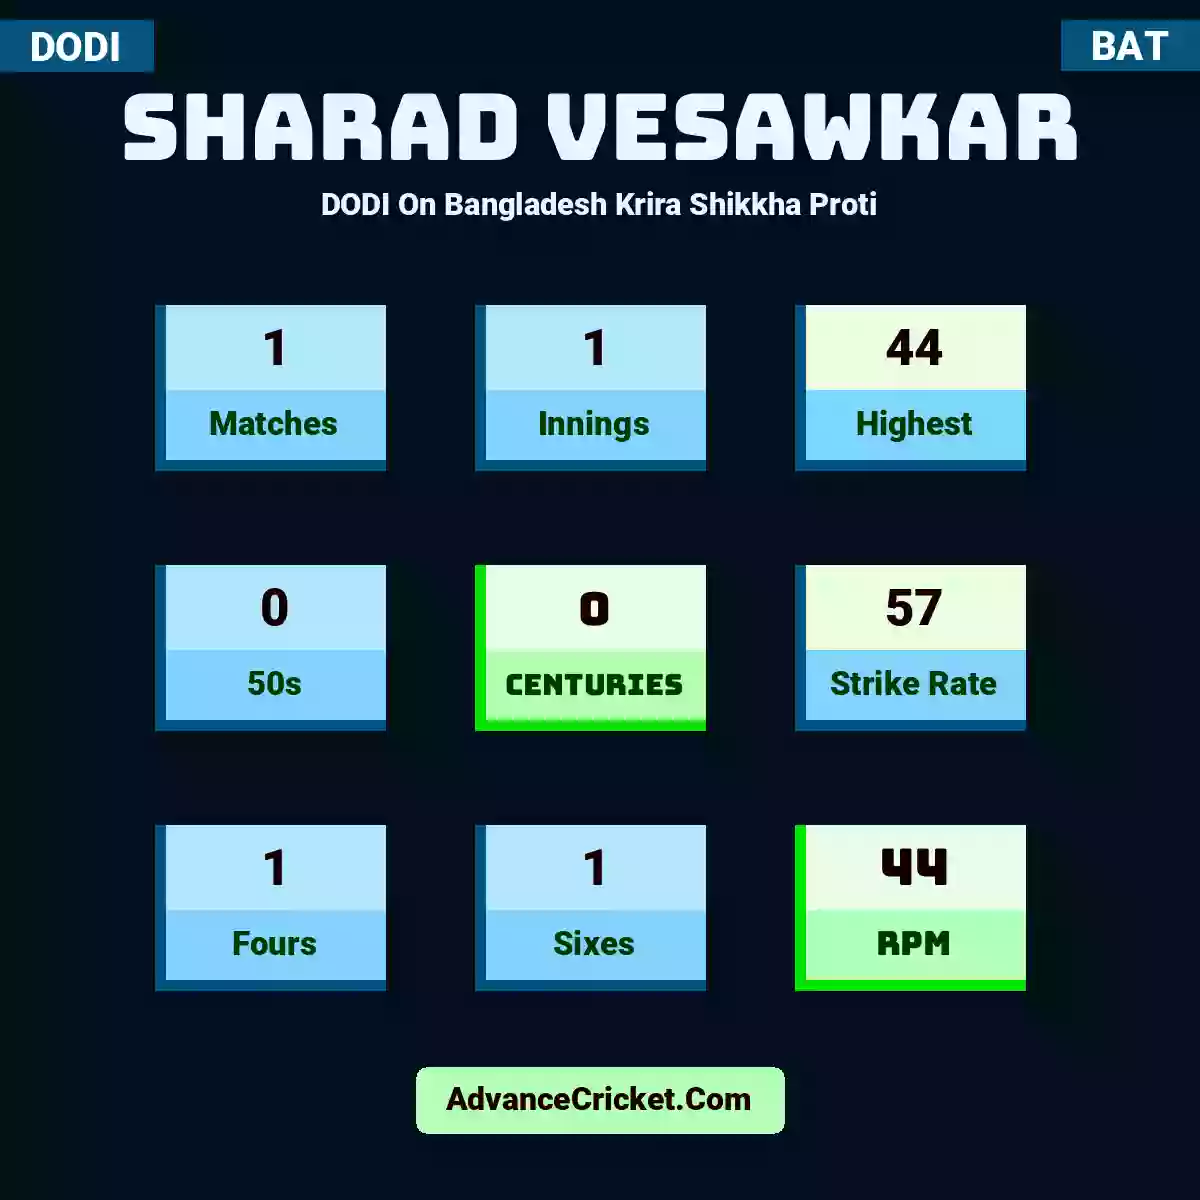 Sharad Vesawkar DODI  On Bangladesh Krira Shikkha Proti, Sharad Vesawkar played 1 matches, scored 44 runs as highest, 0 half-centuries, and 0 centuries, with a strike rate of 57. S.Vesawkar hit 1 fours and 1 sixes, with an RPM of 44.